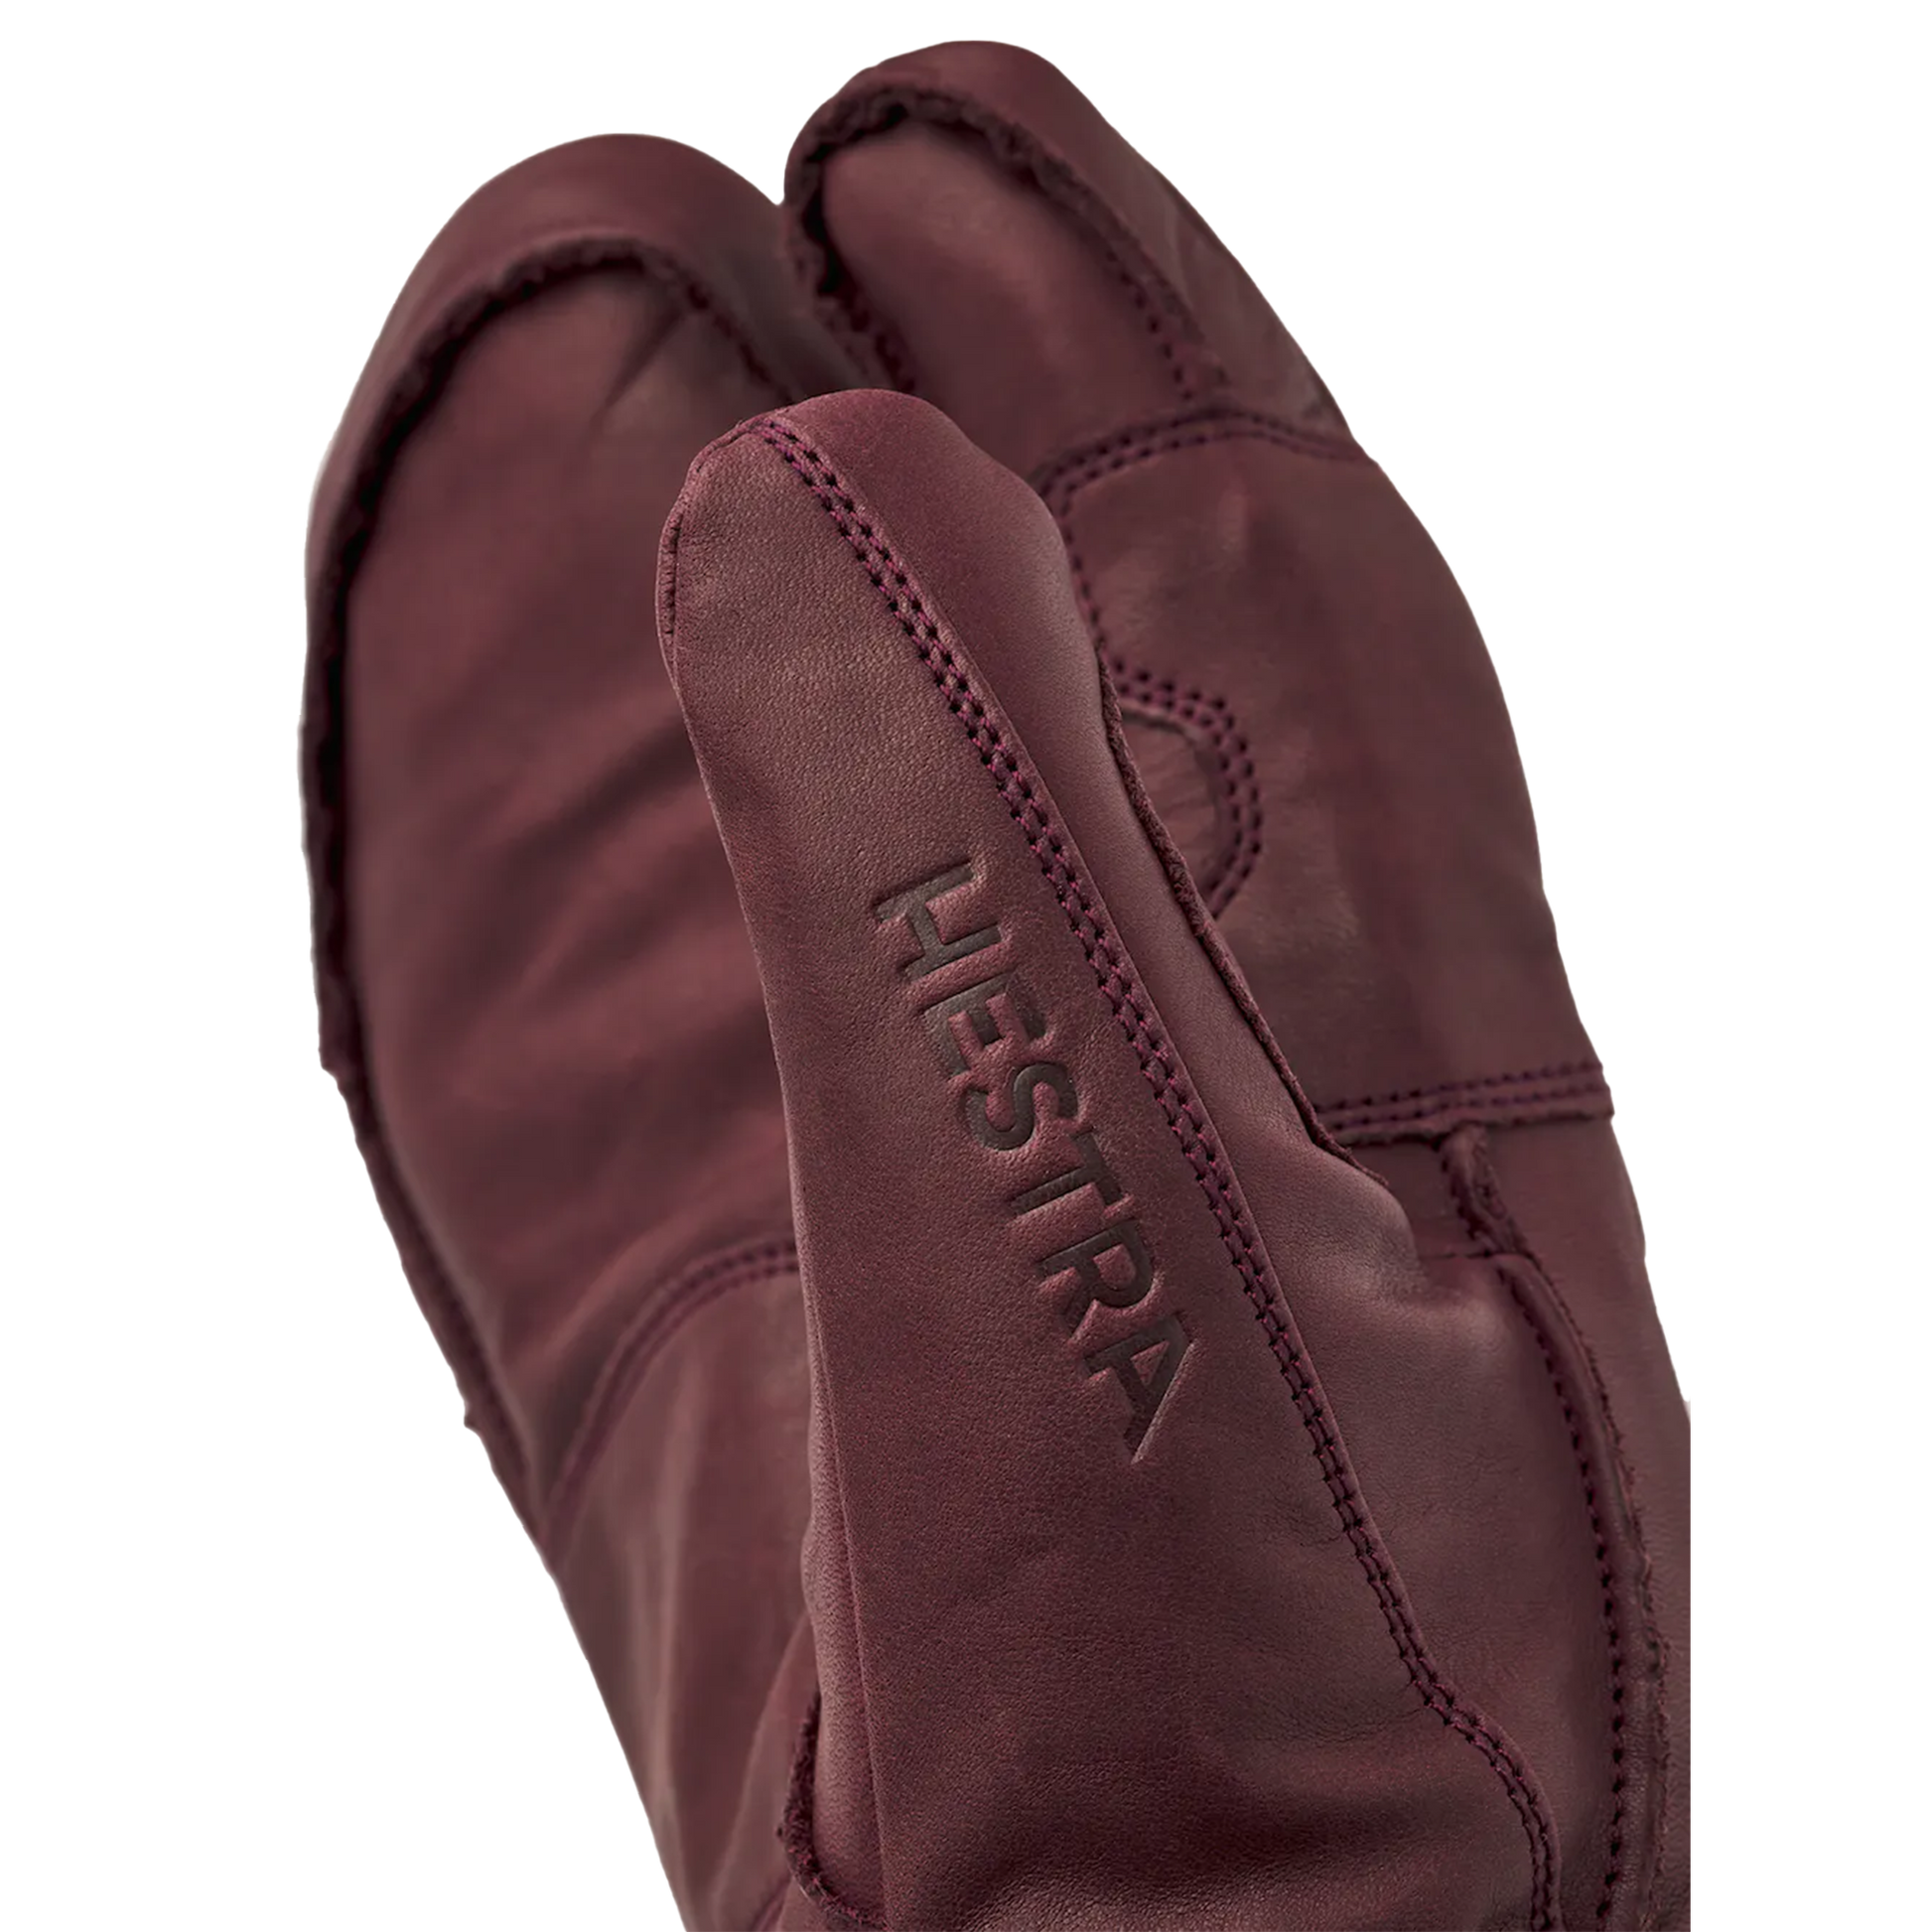 Hestra Alpine Pro Fall Line 3-Finger Glove Burgandy/Burgandy Snow Gloves